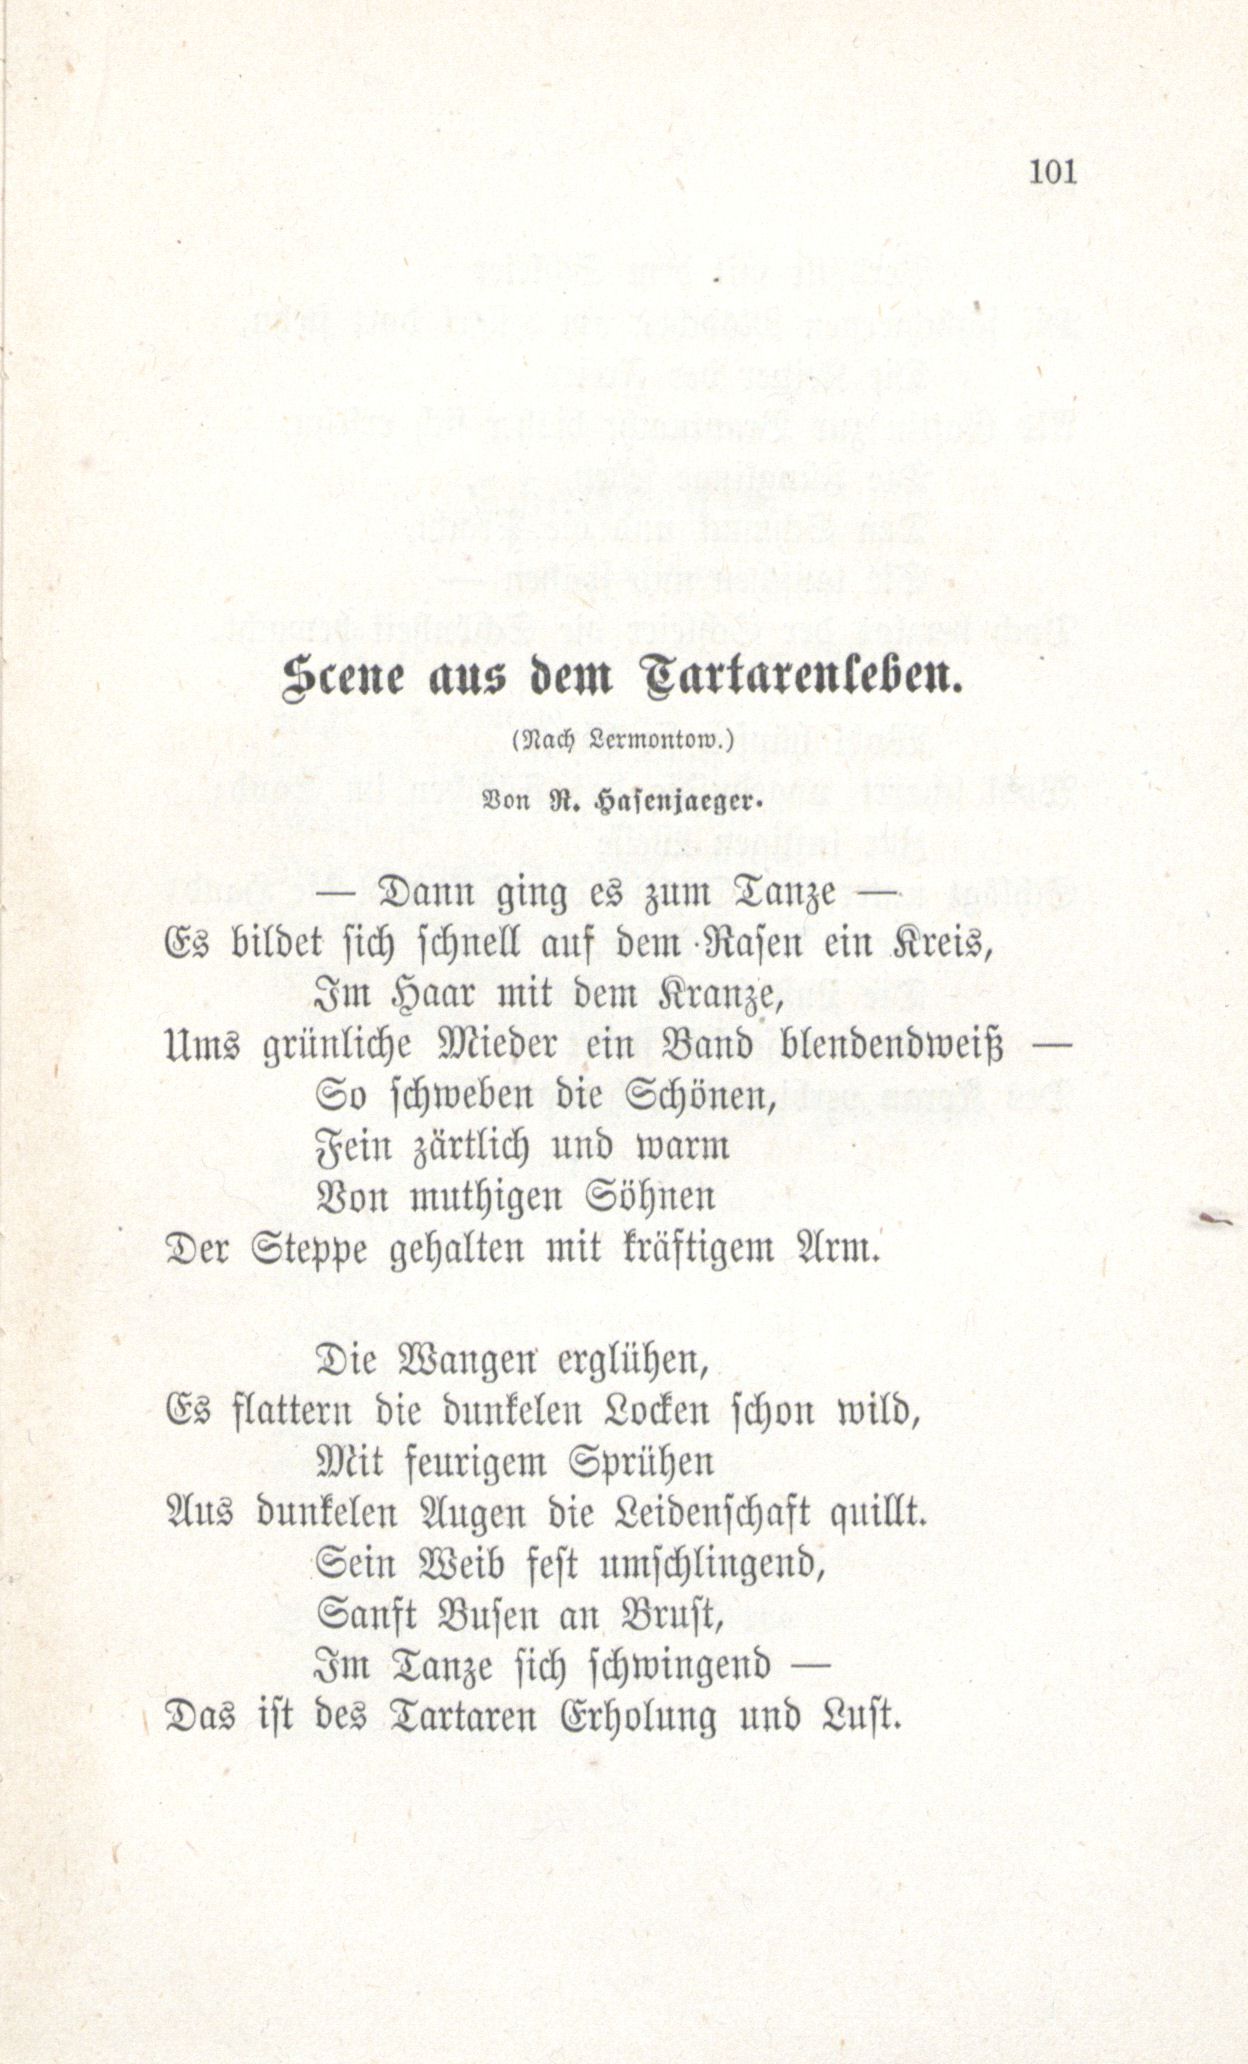 Scene aus dem Tartarenleben (1880) | 1. (101) Main body of text